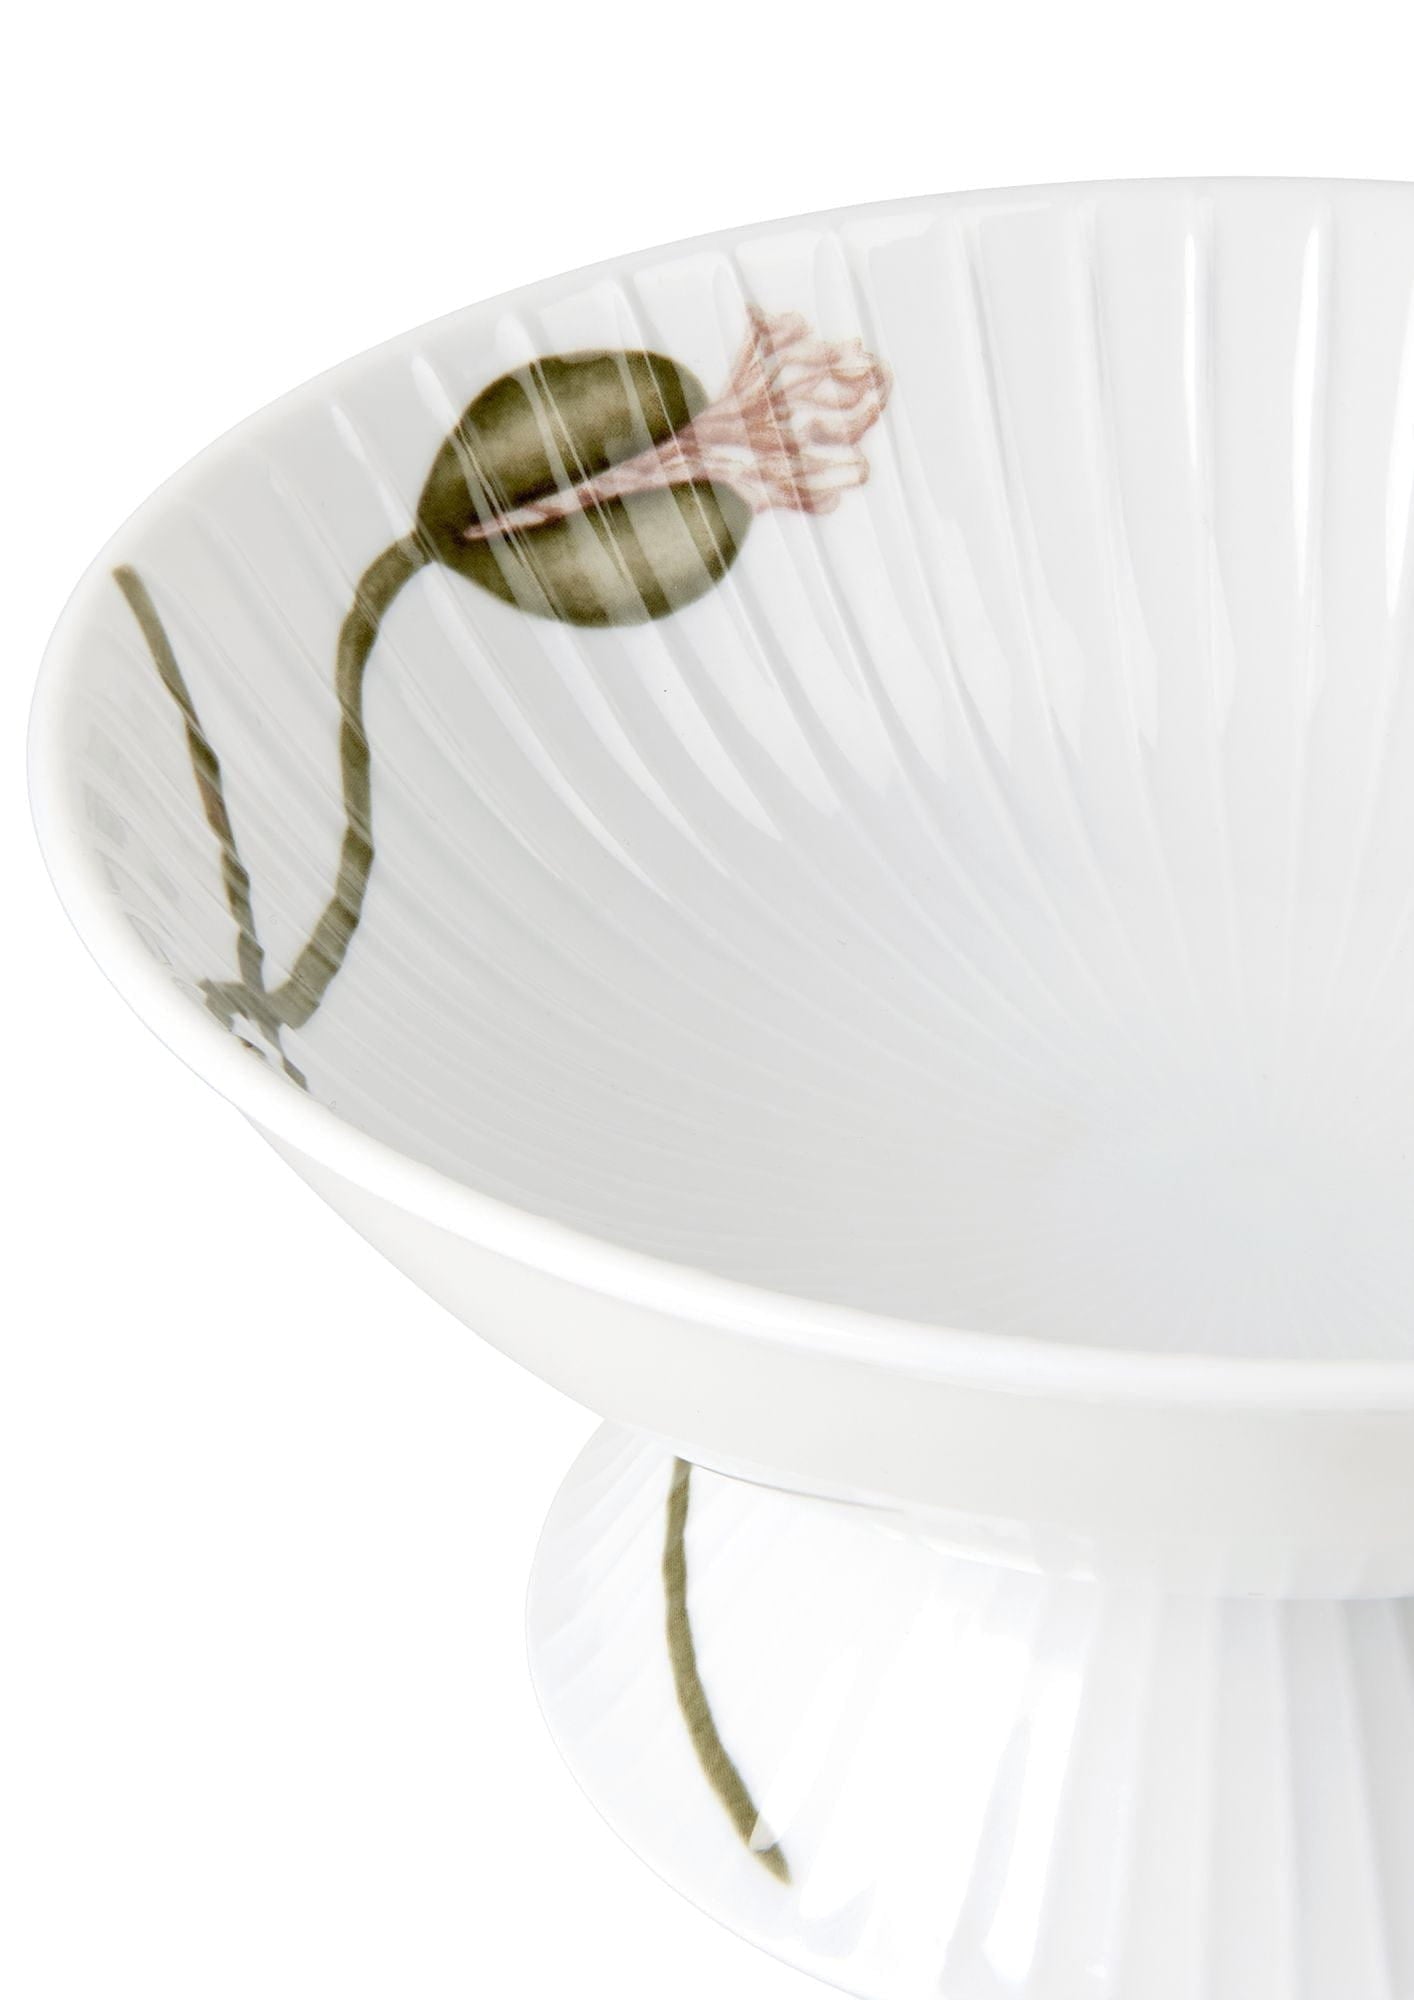 Kähler Hammershøi Poppy Bowl zu Fuß Ø16 cm, weiß mit Dekoration